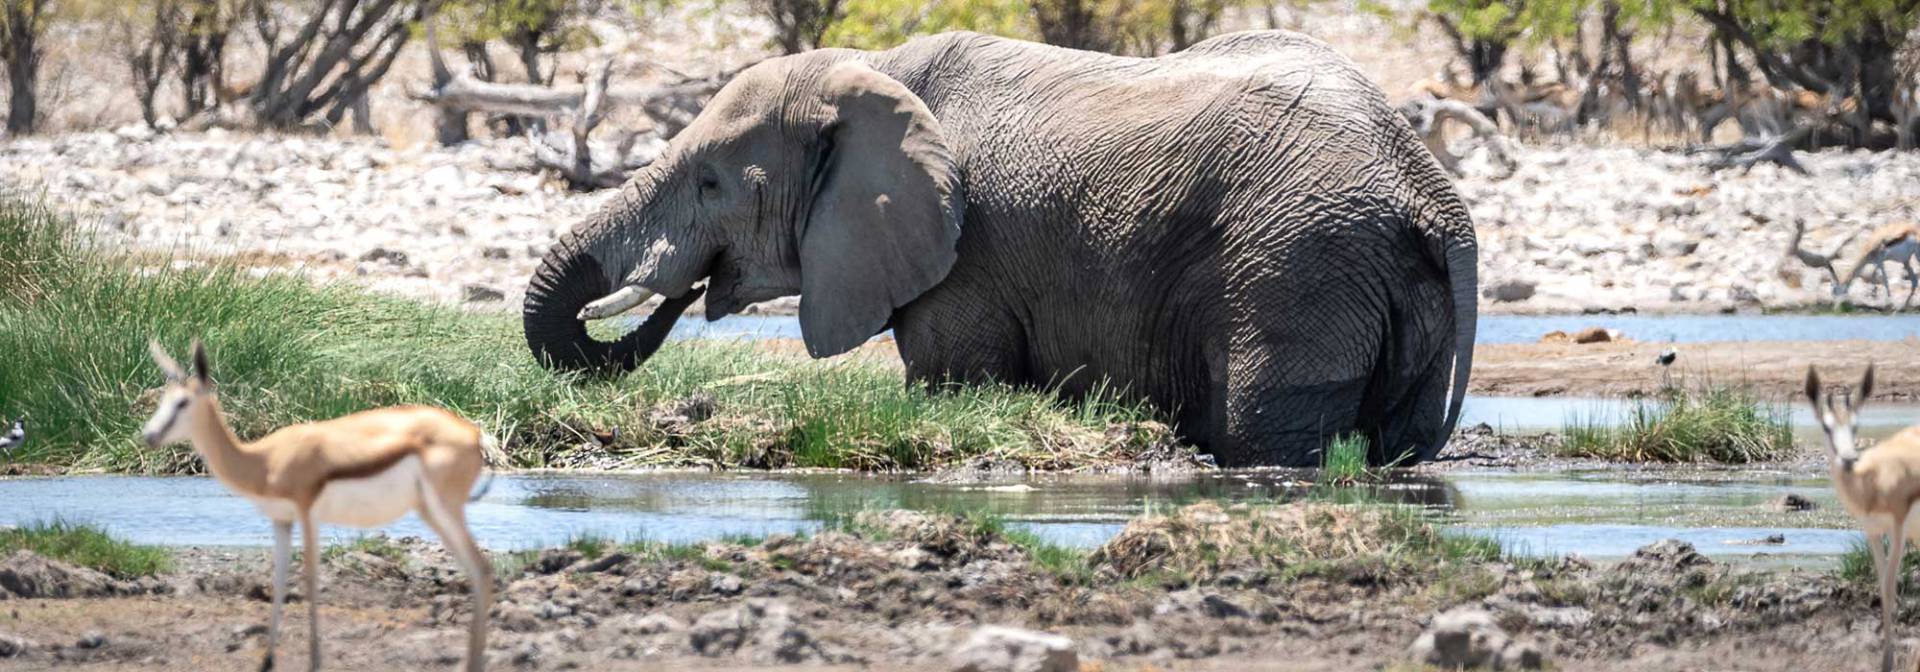 Springbock und Elefant im Etoscha Nationalpark